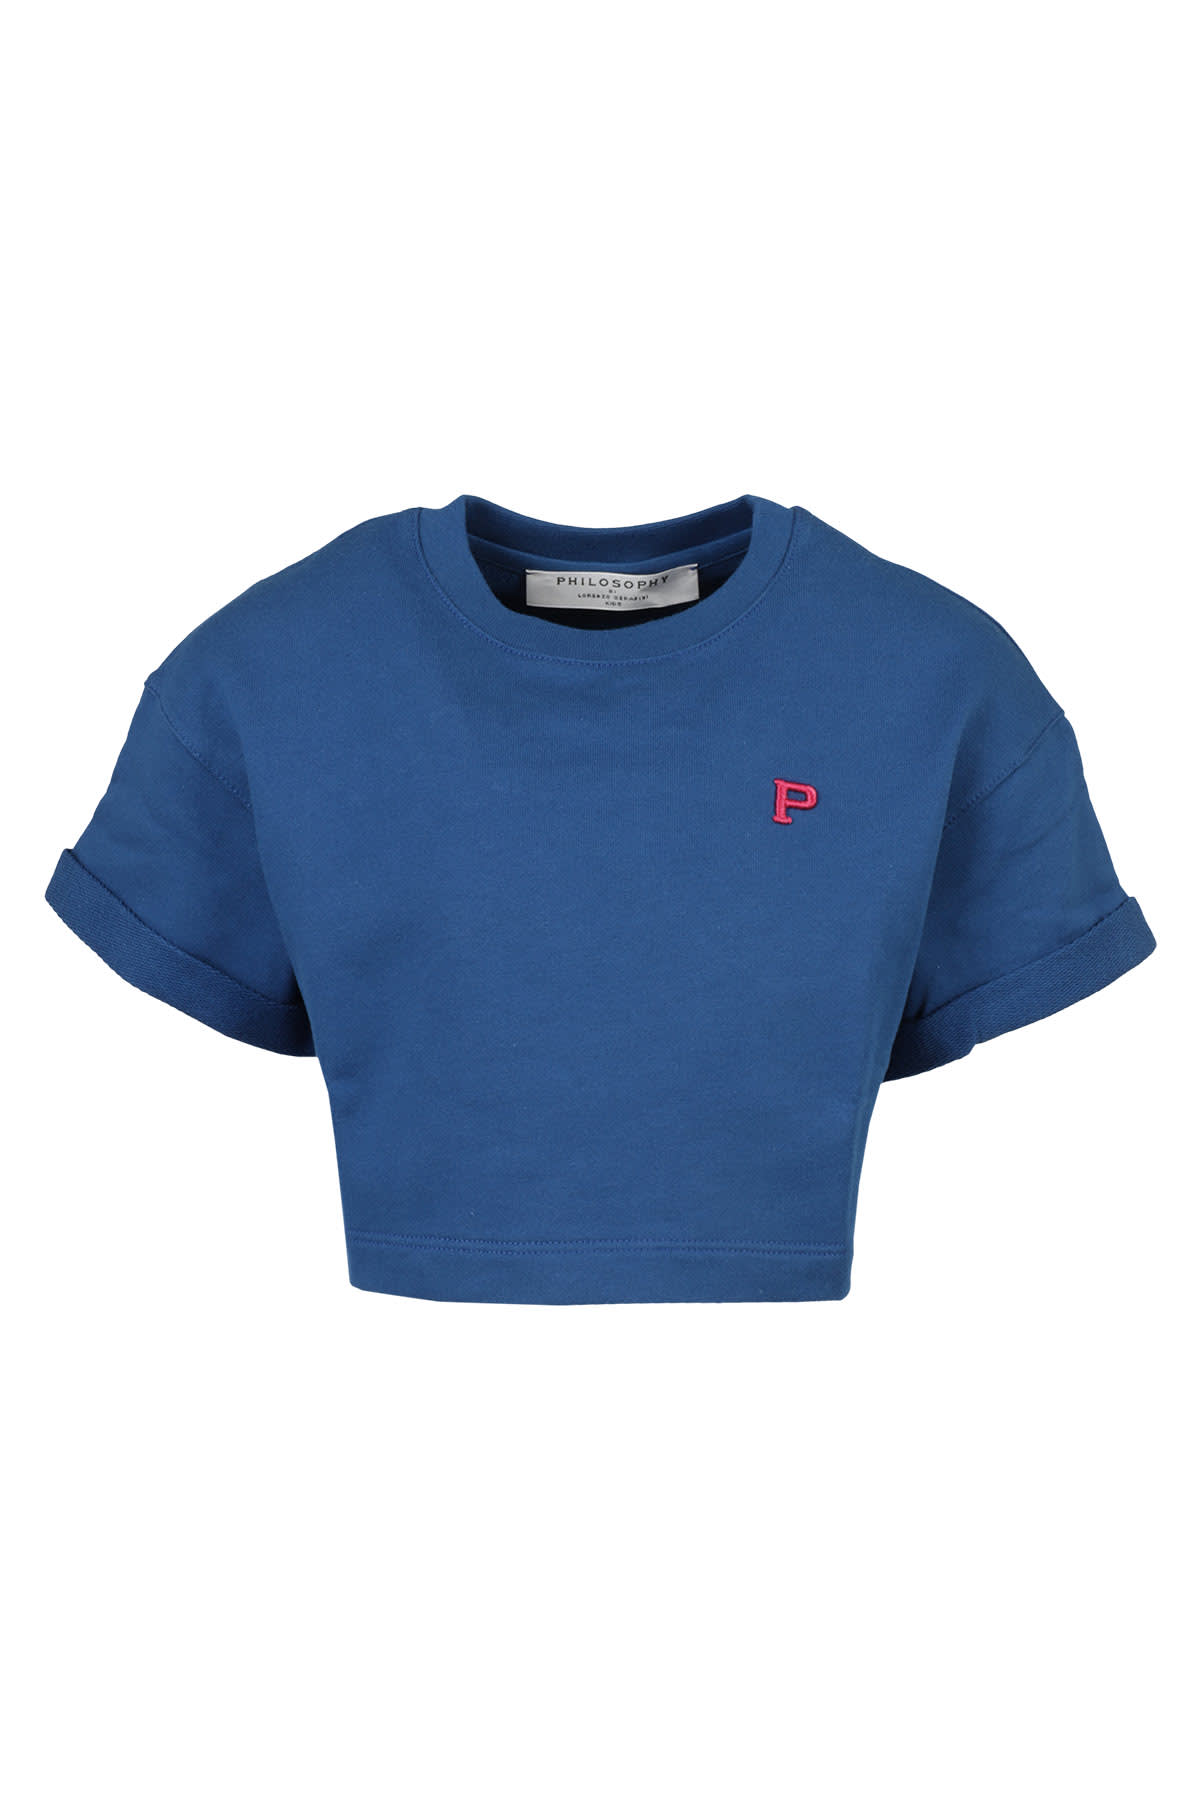 Philosophy Di Lorenzo Serafini Kids' Sweater In Blu Multi